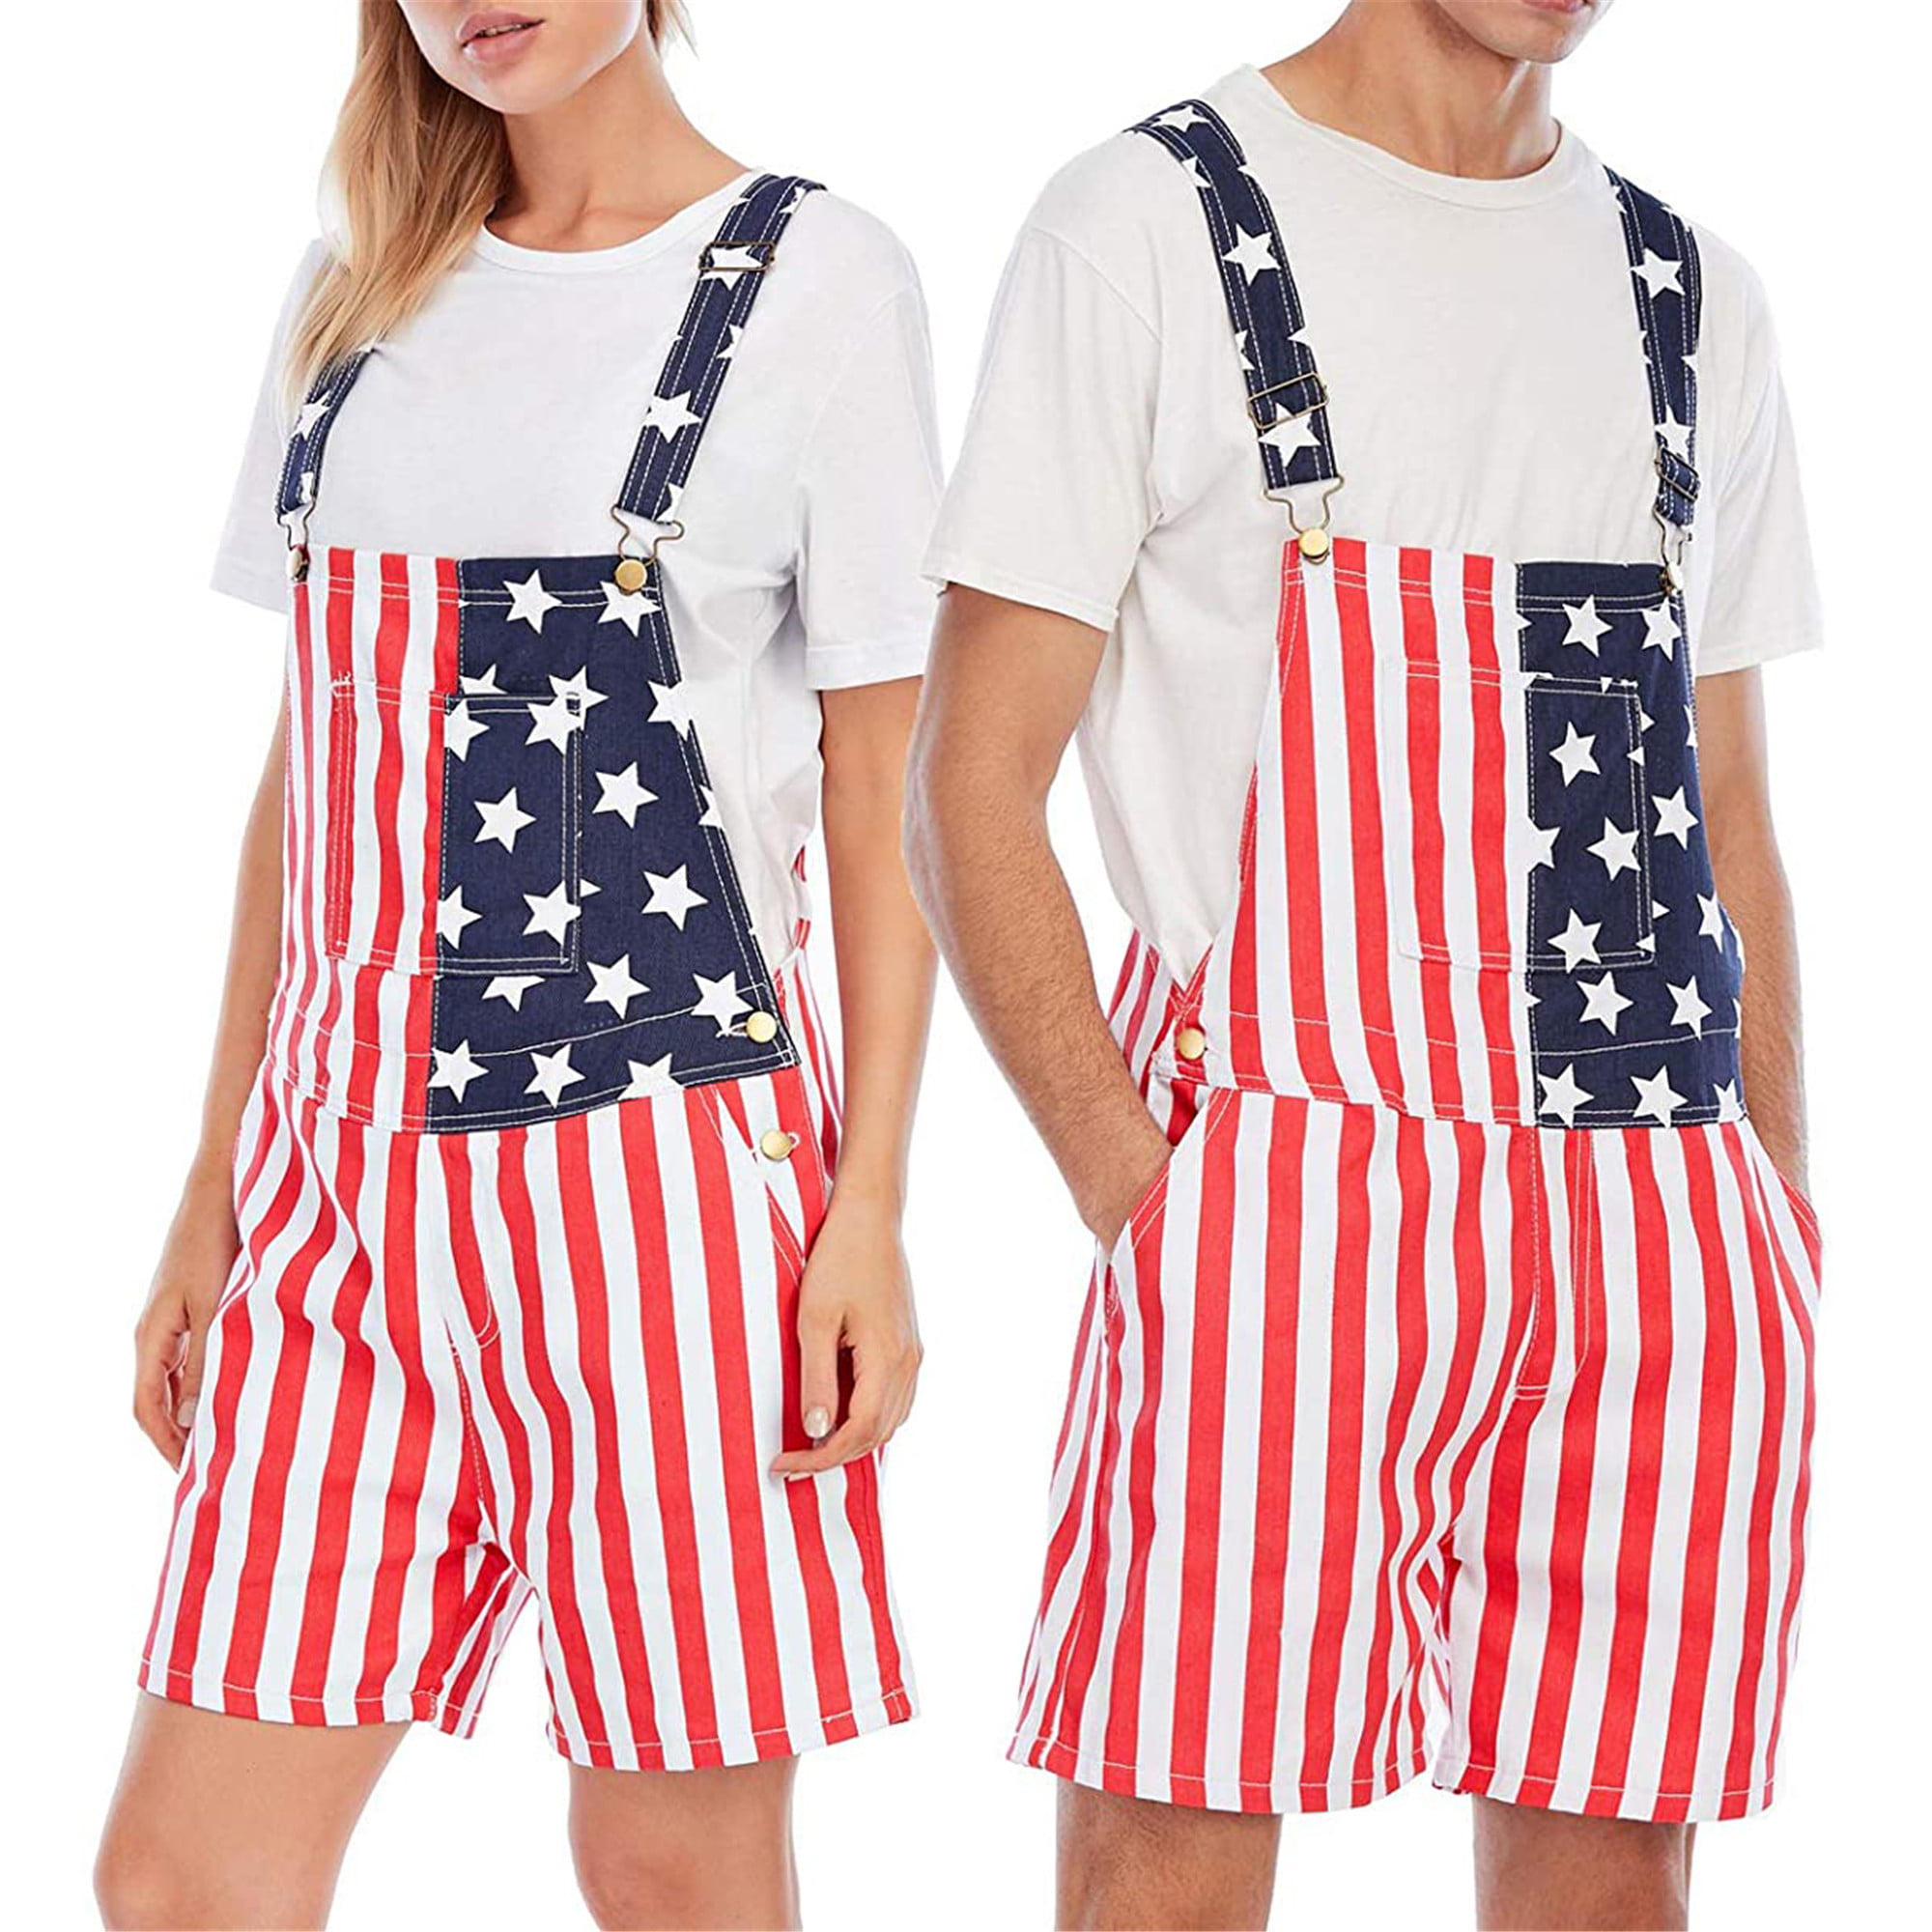 YXLUOKY Unisex Mens Womens Patriotic American Flag Print Denim Bib Overall Shorts Jeans 